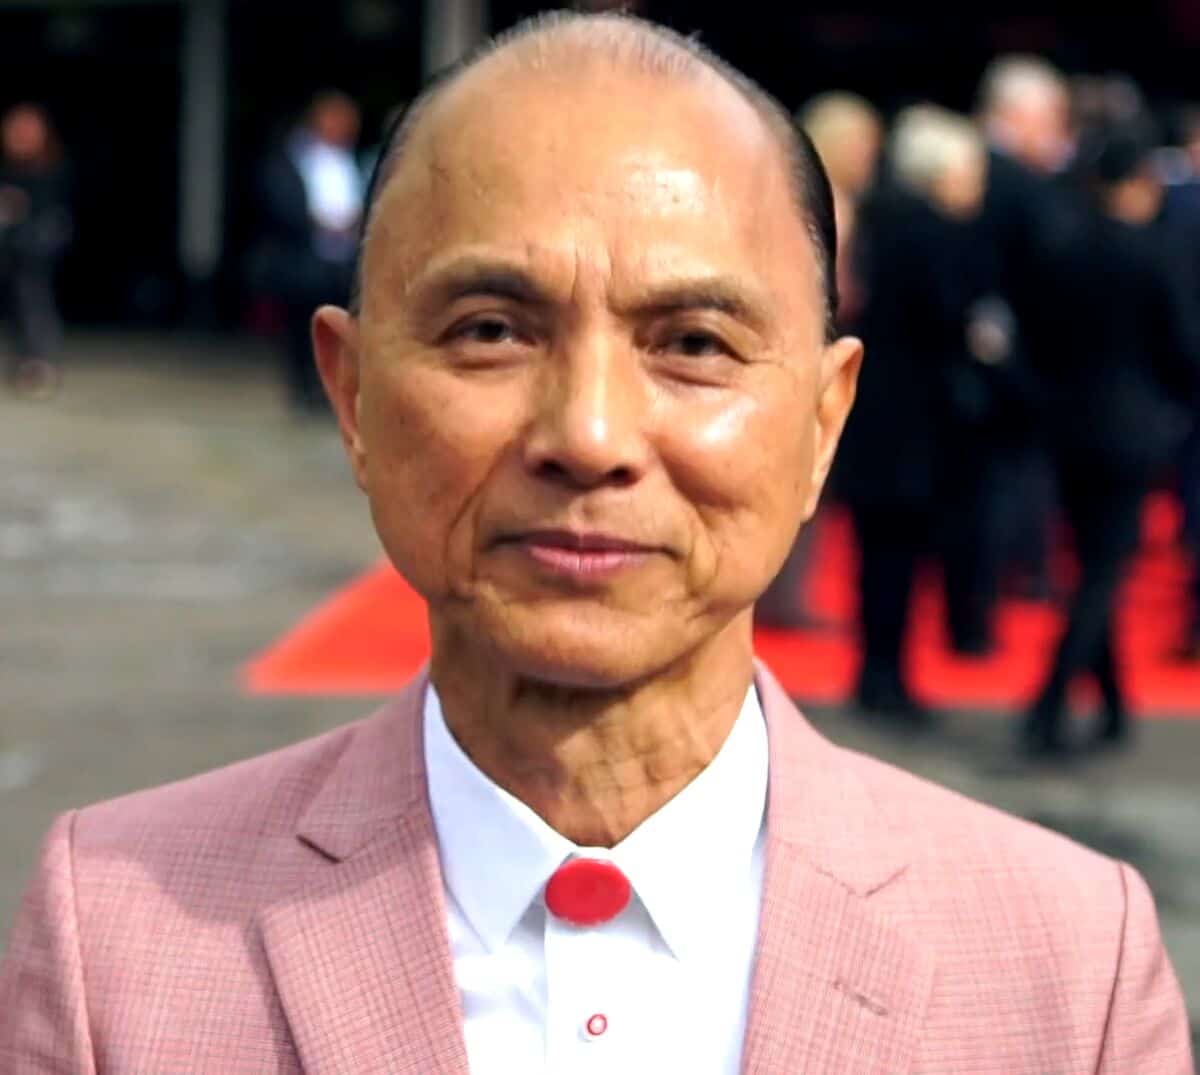 Jimmy Choo - Famous Fashion Designer